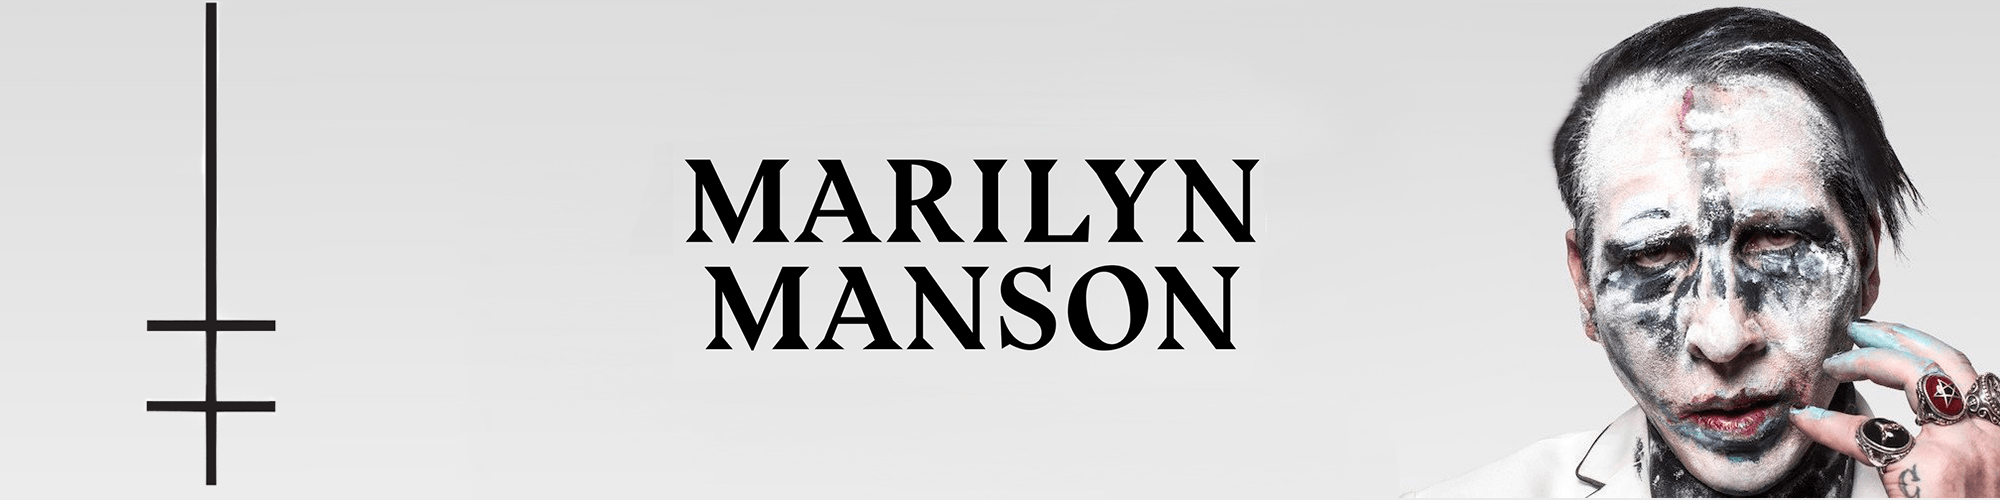 Marilyn Manson Official Logo - Marilyn Manson Store